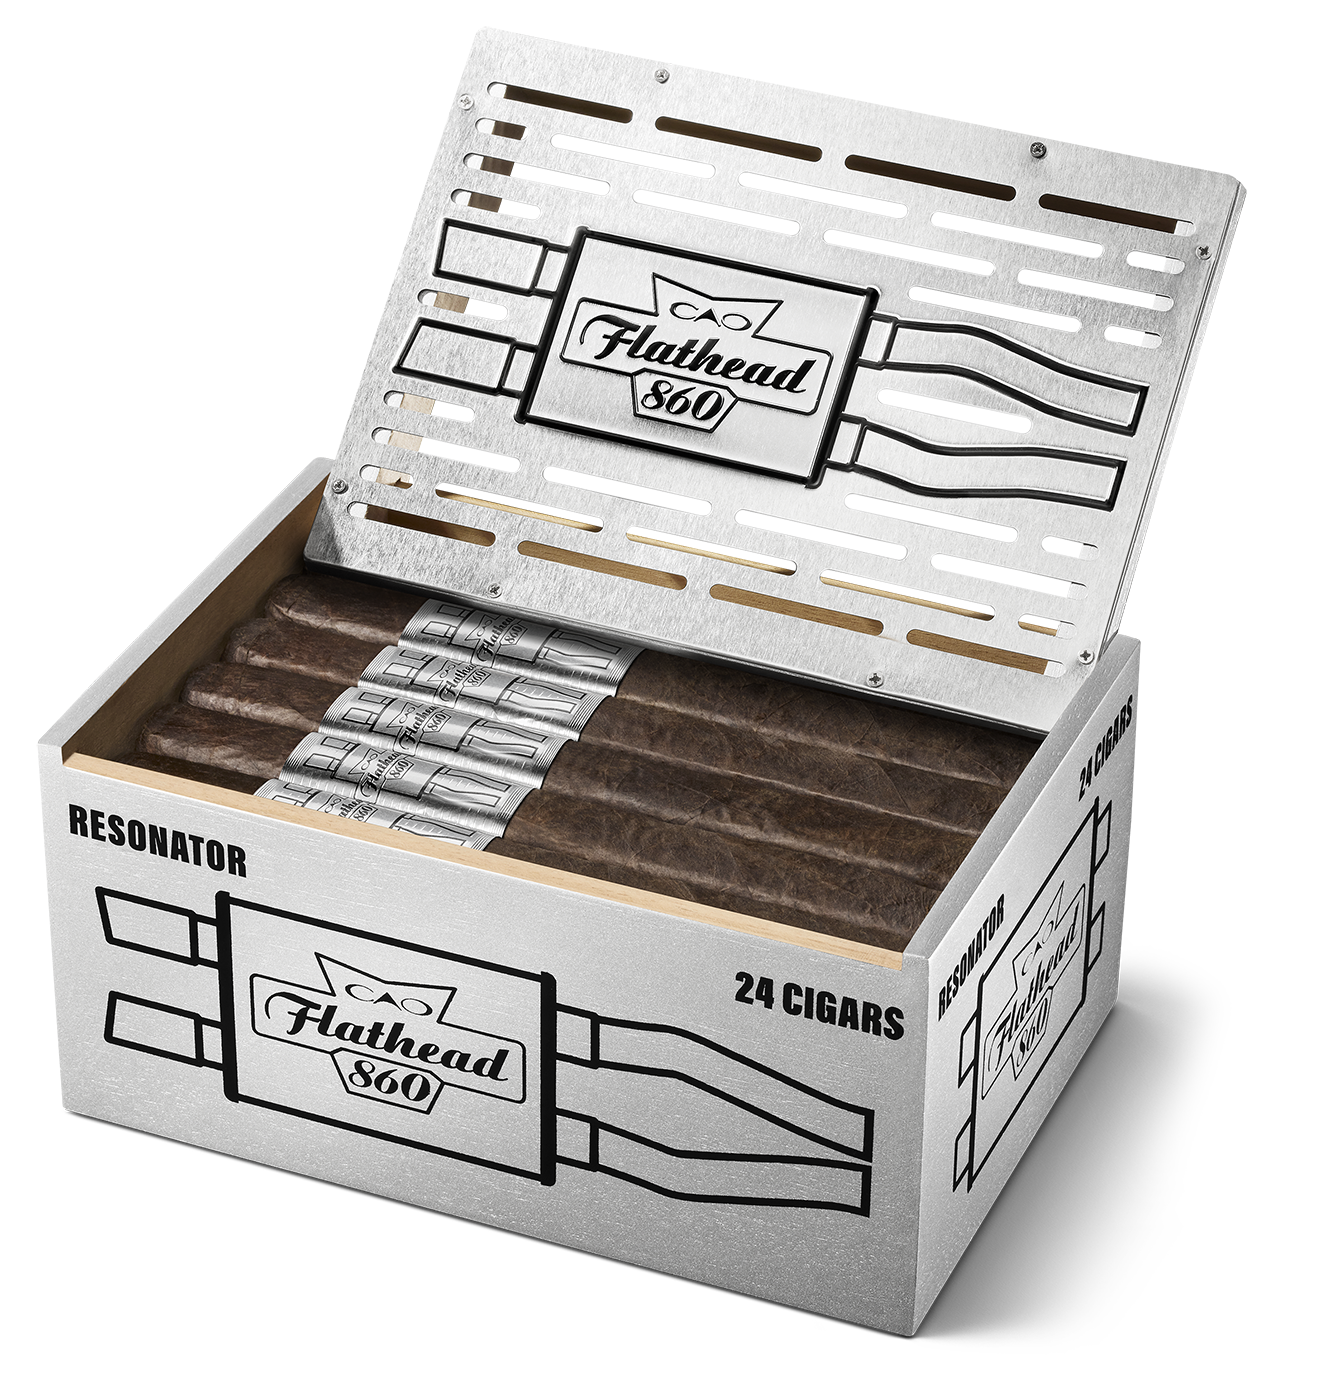 Open Box of Flathead Cigars